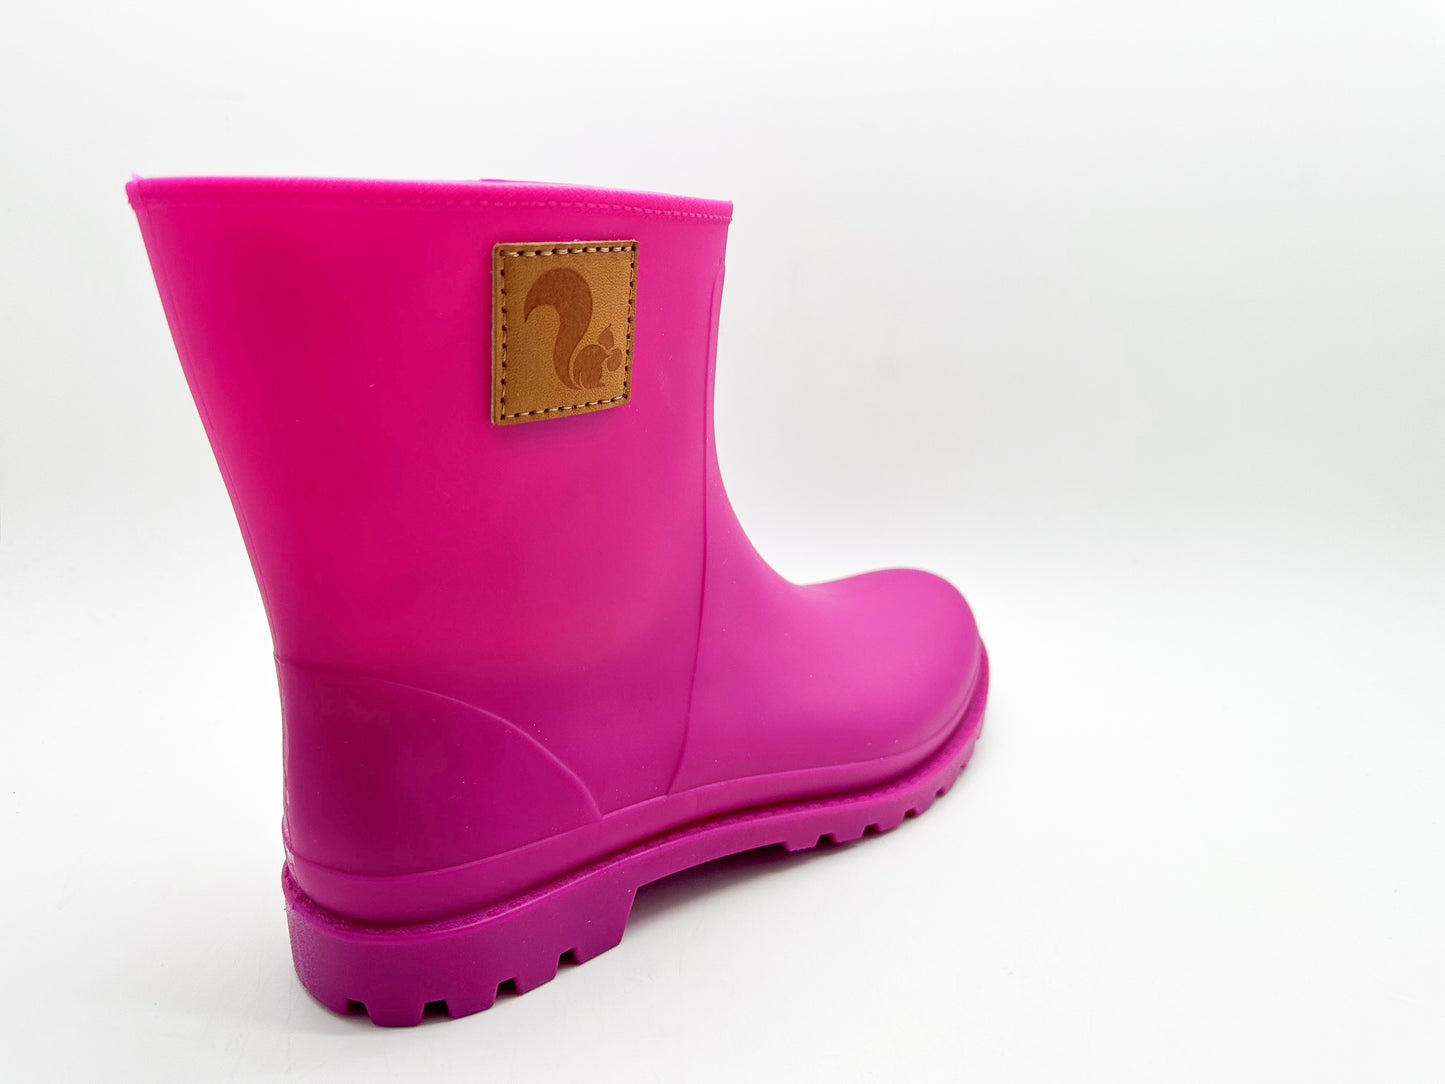 thies ® Bio Rainboot orchid pink vegan (W) | 100% waterproof biodegradable rainboots